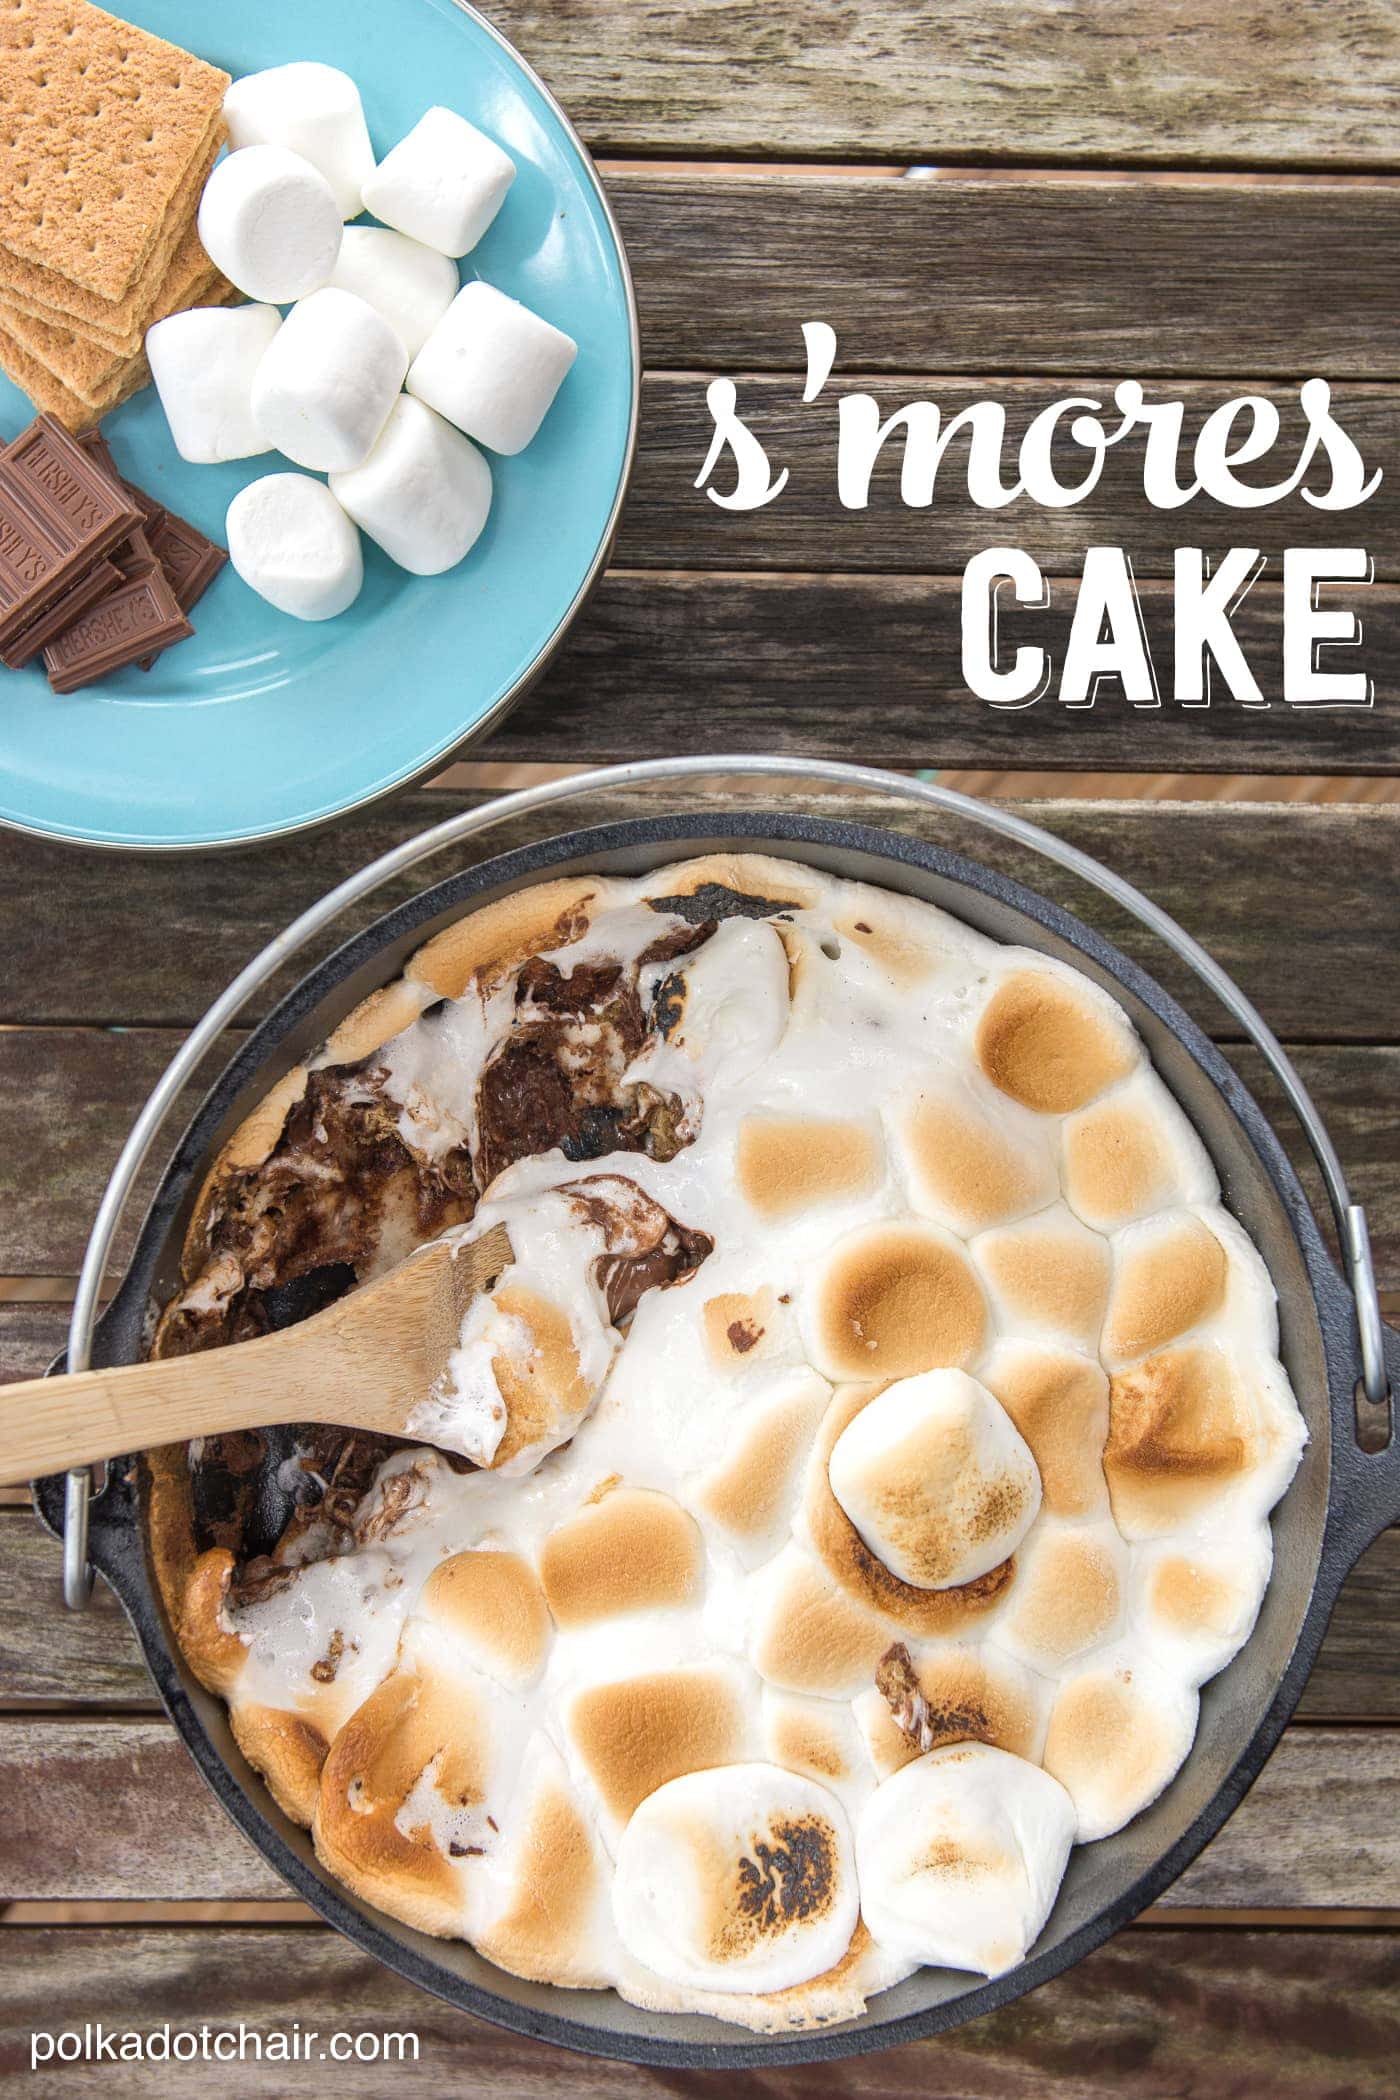 https://www.polkadotchair.com/wp-content/uploads/2015/07/dutch-oven-smores-cake-recipe.jpg